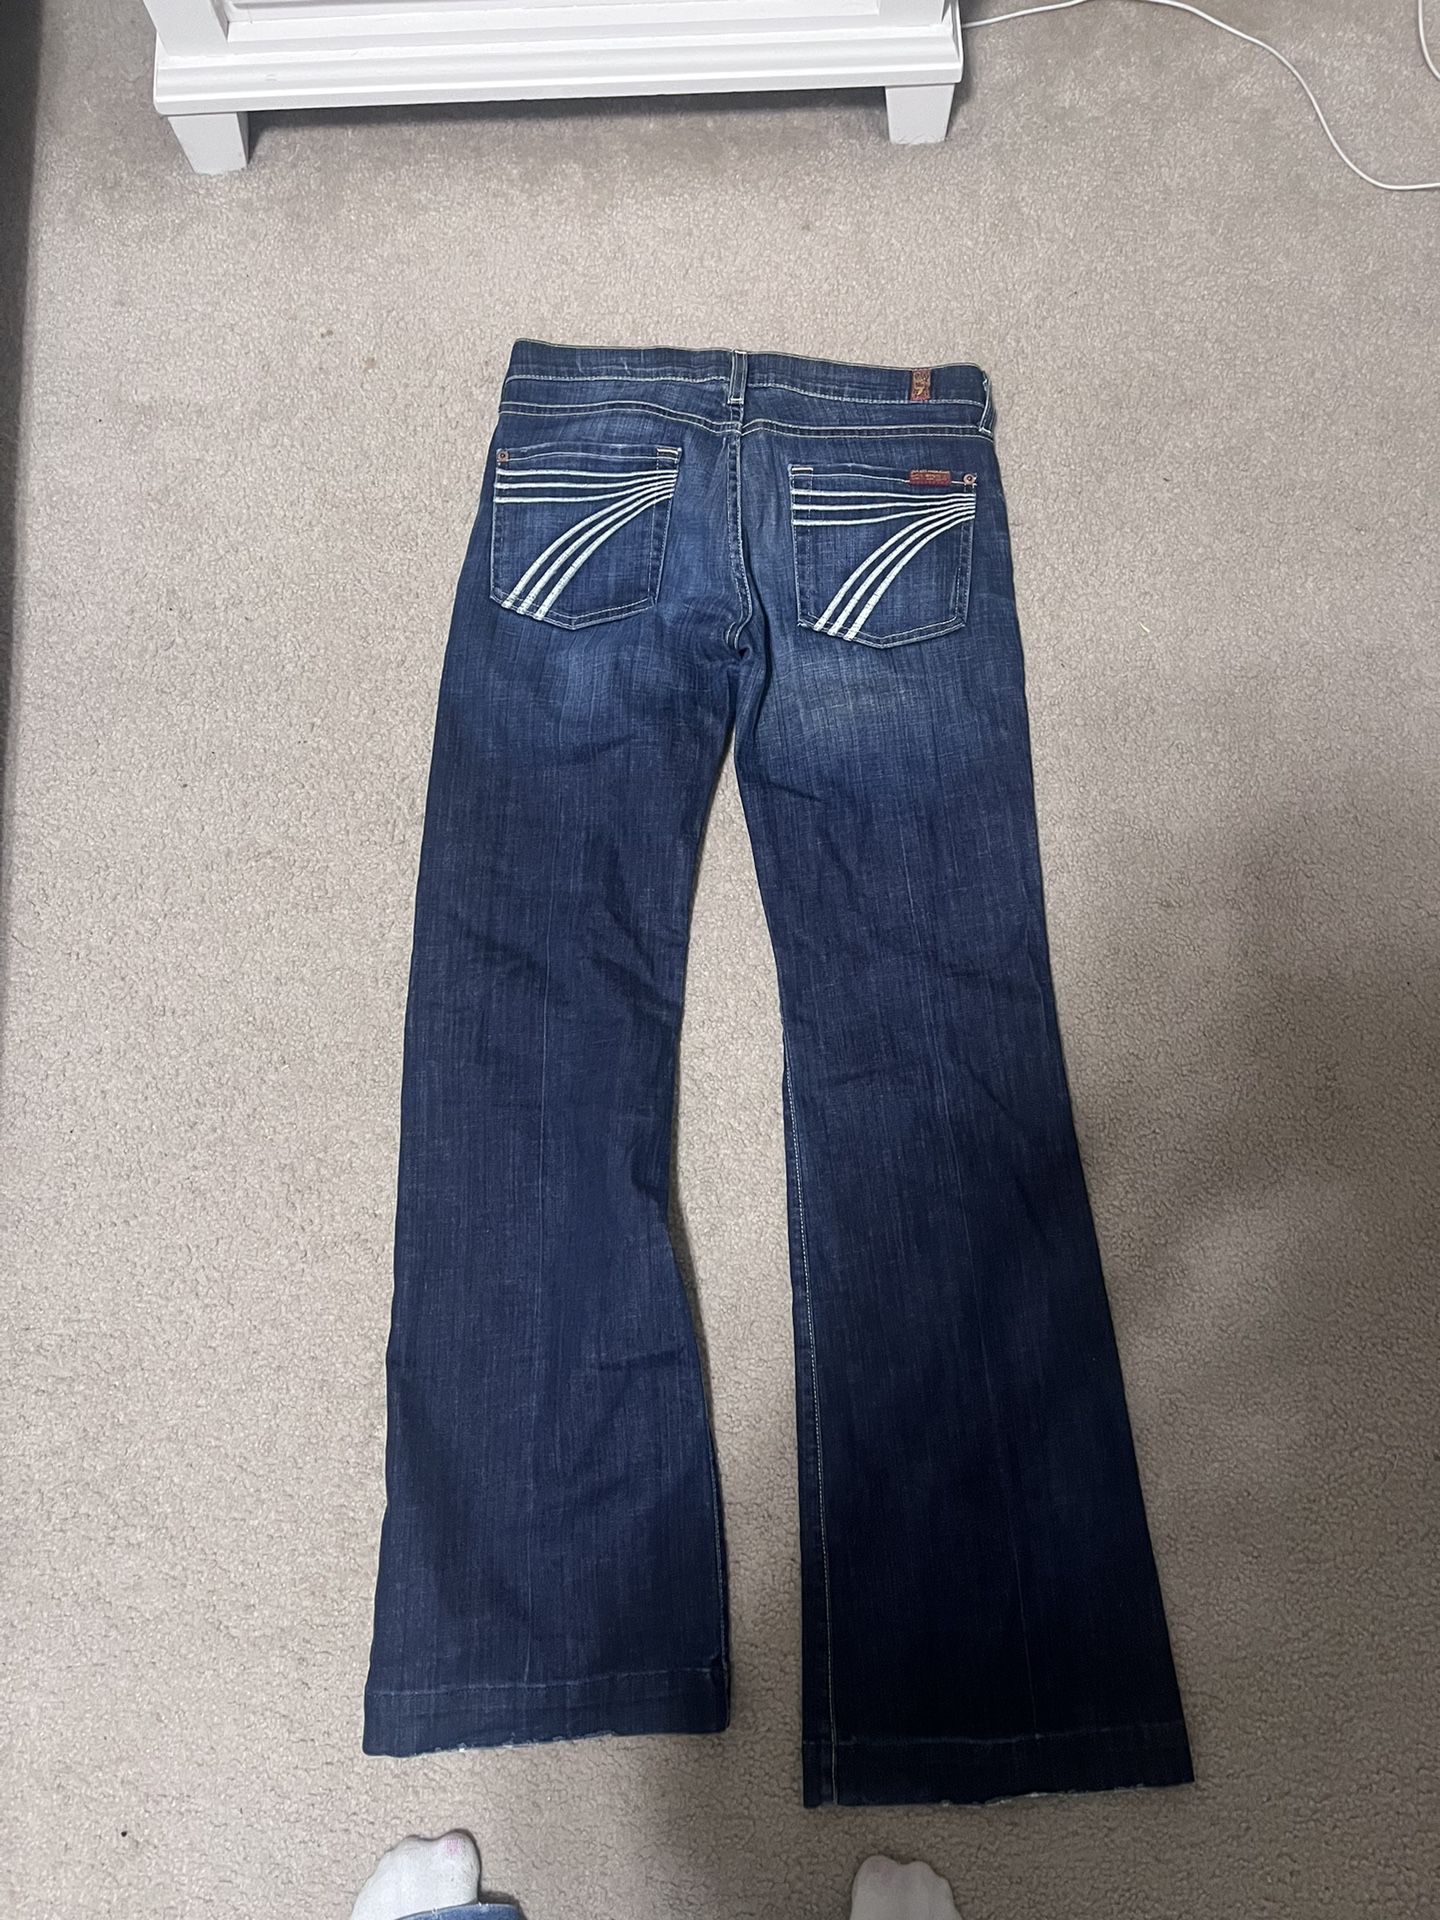 Seven Jeans Women's for Sale in Fresno, -